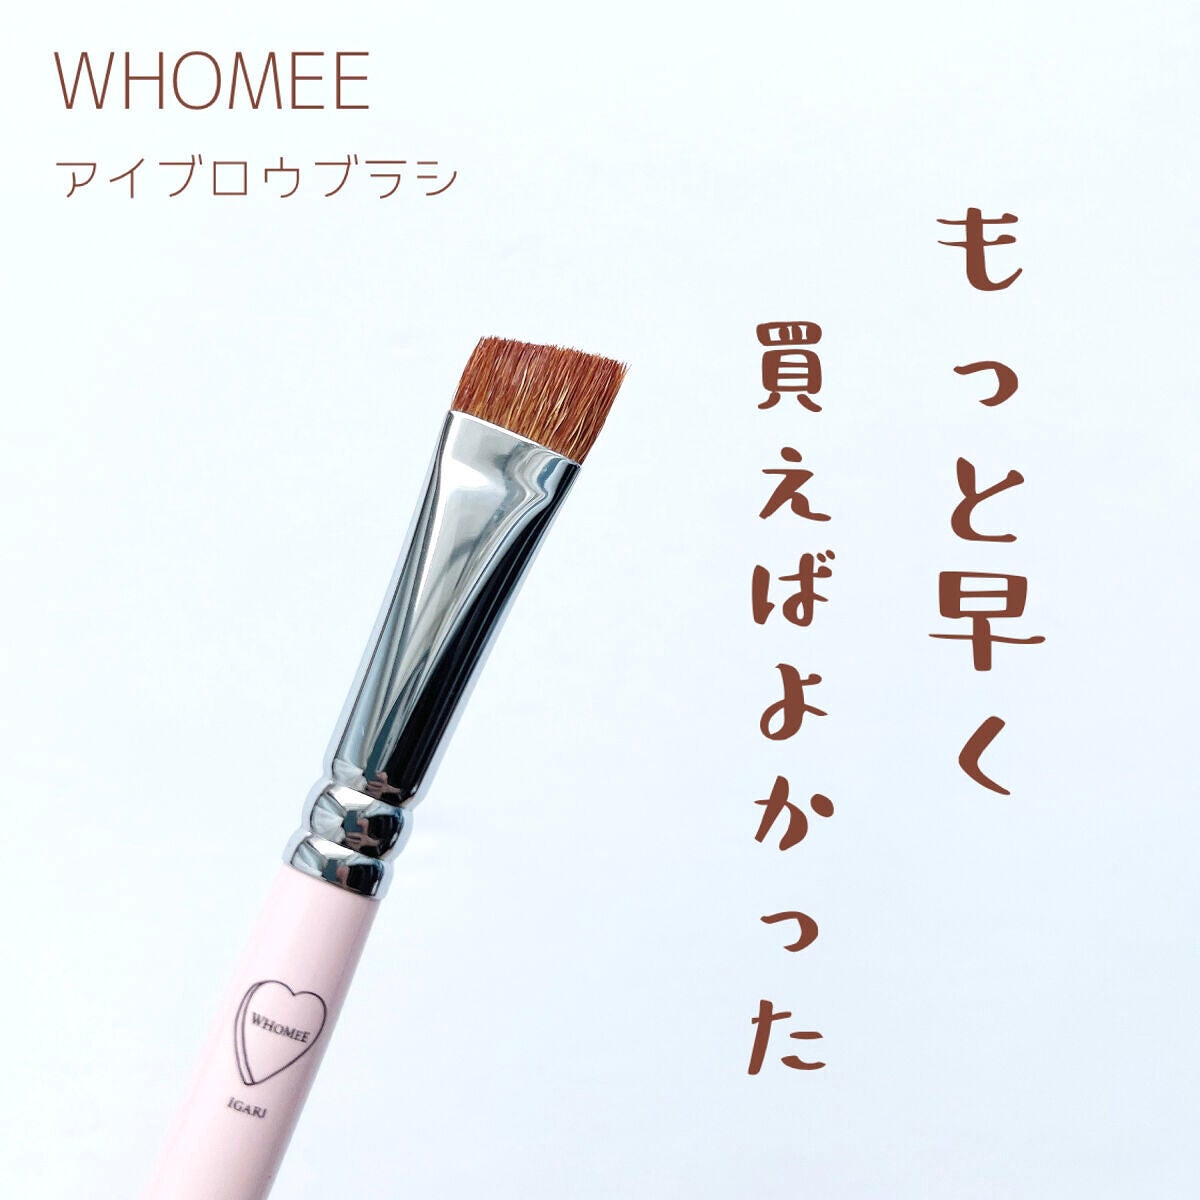 whomee アイブロウブラシ 熊野筆 - メイク道具・化粧小物